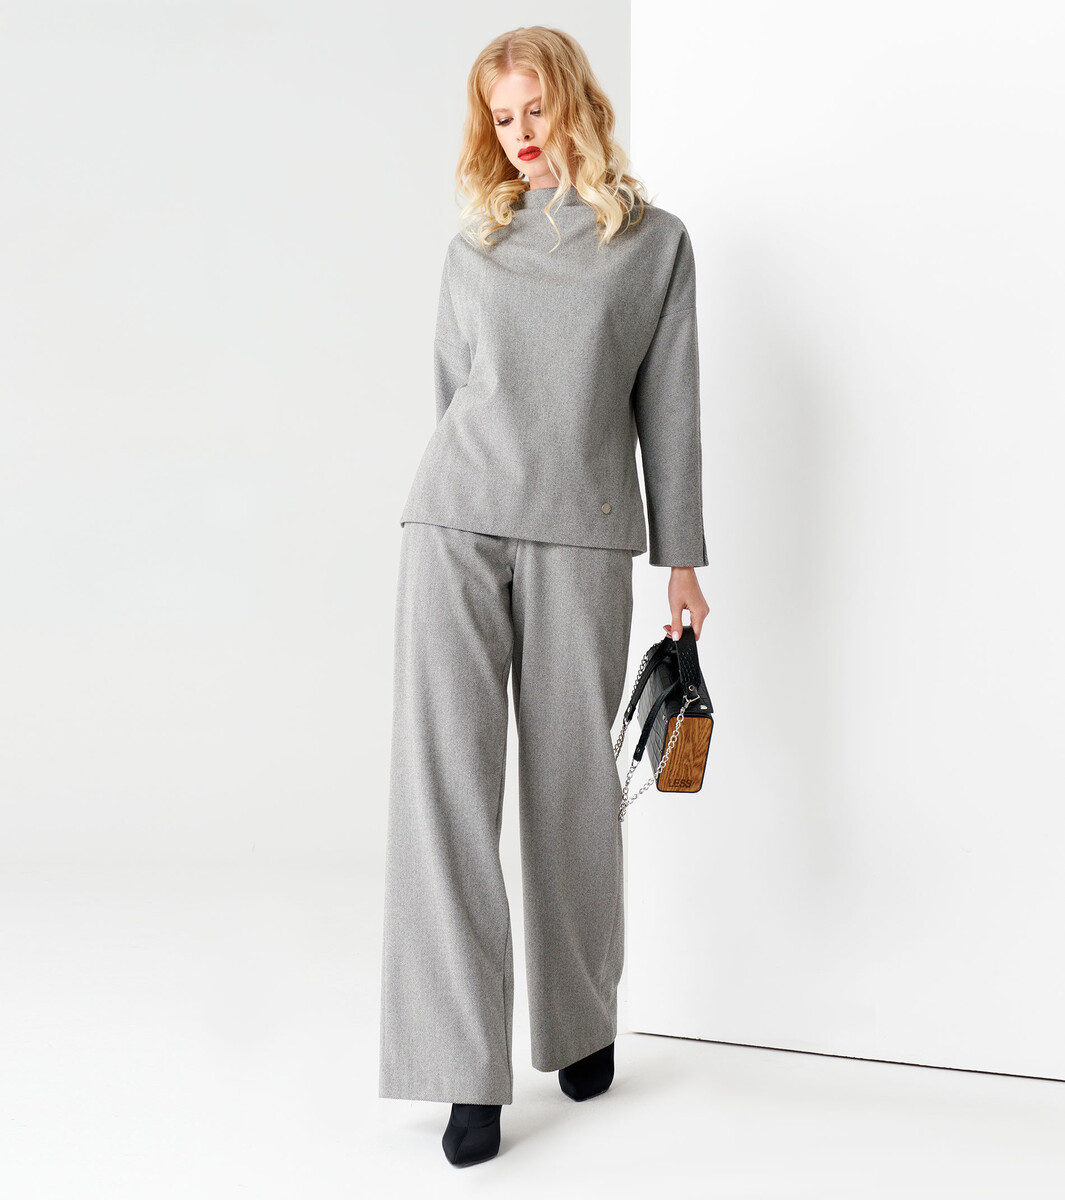 Комплект женский (туника, брюки) PANDA, размер 42, цвет серый 01121973 - фото 1